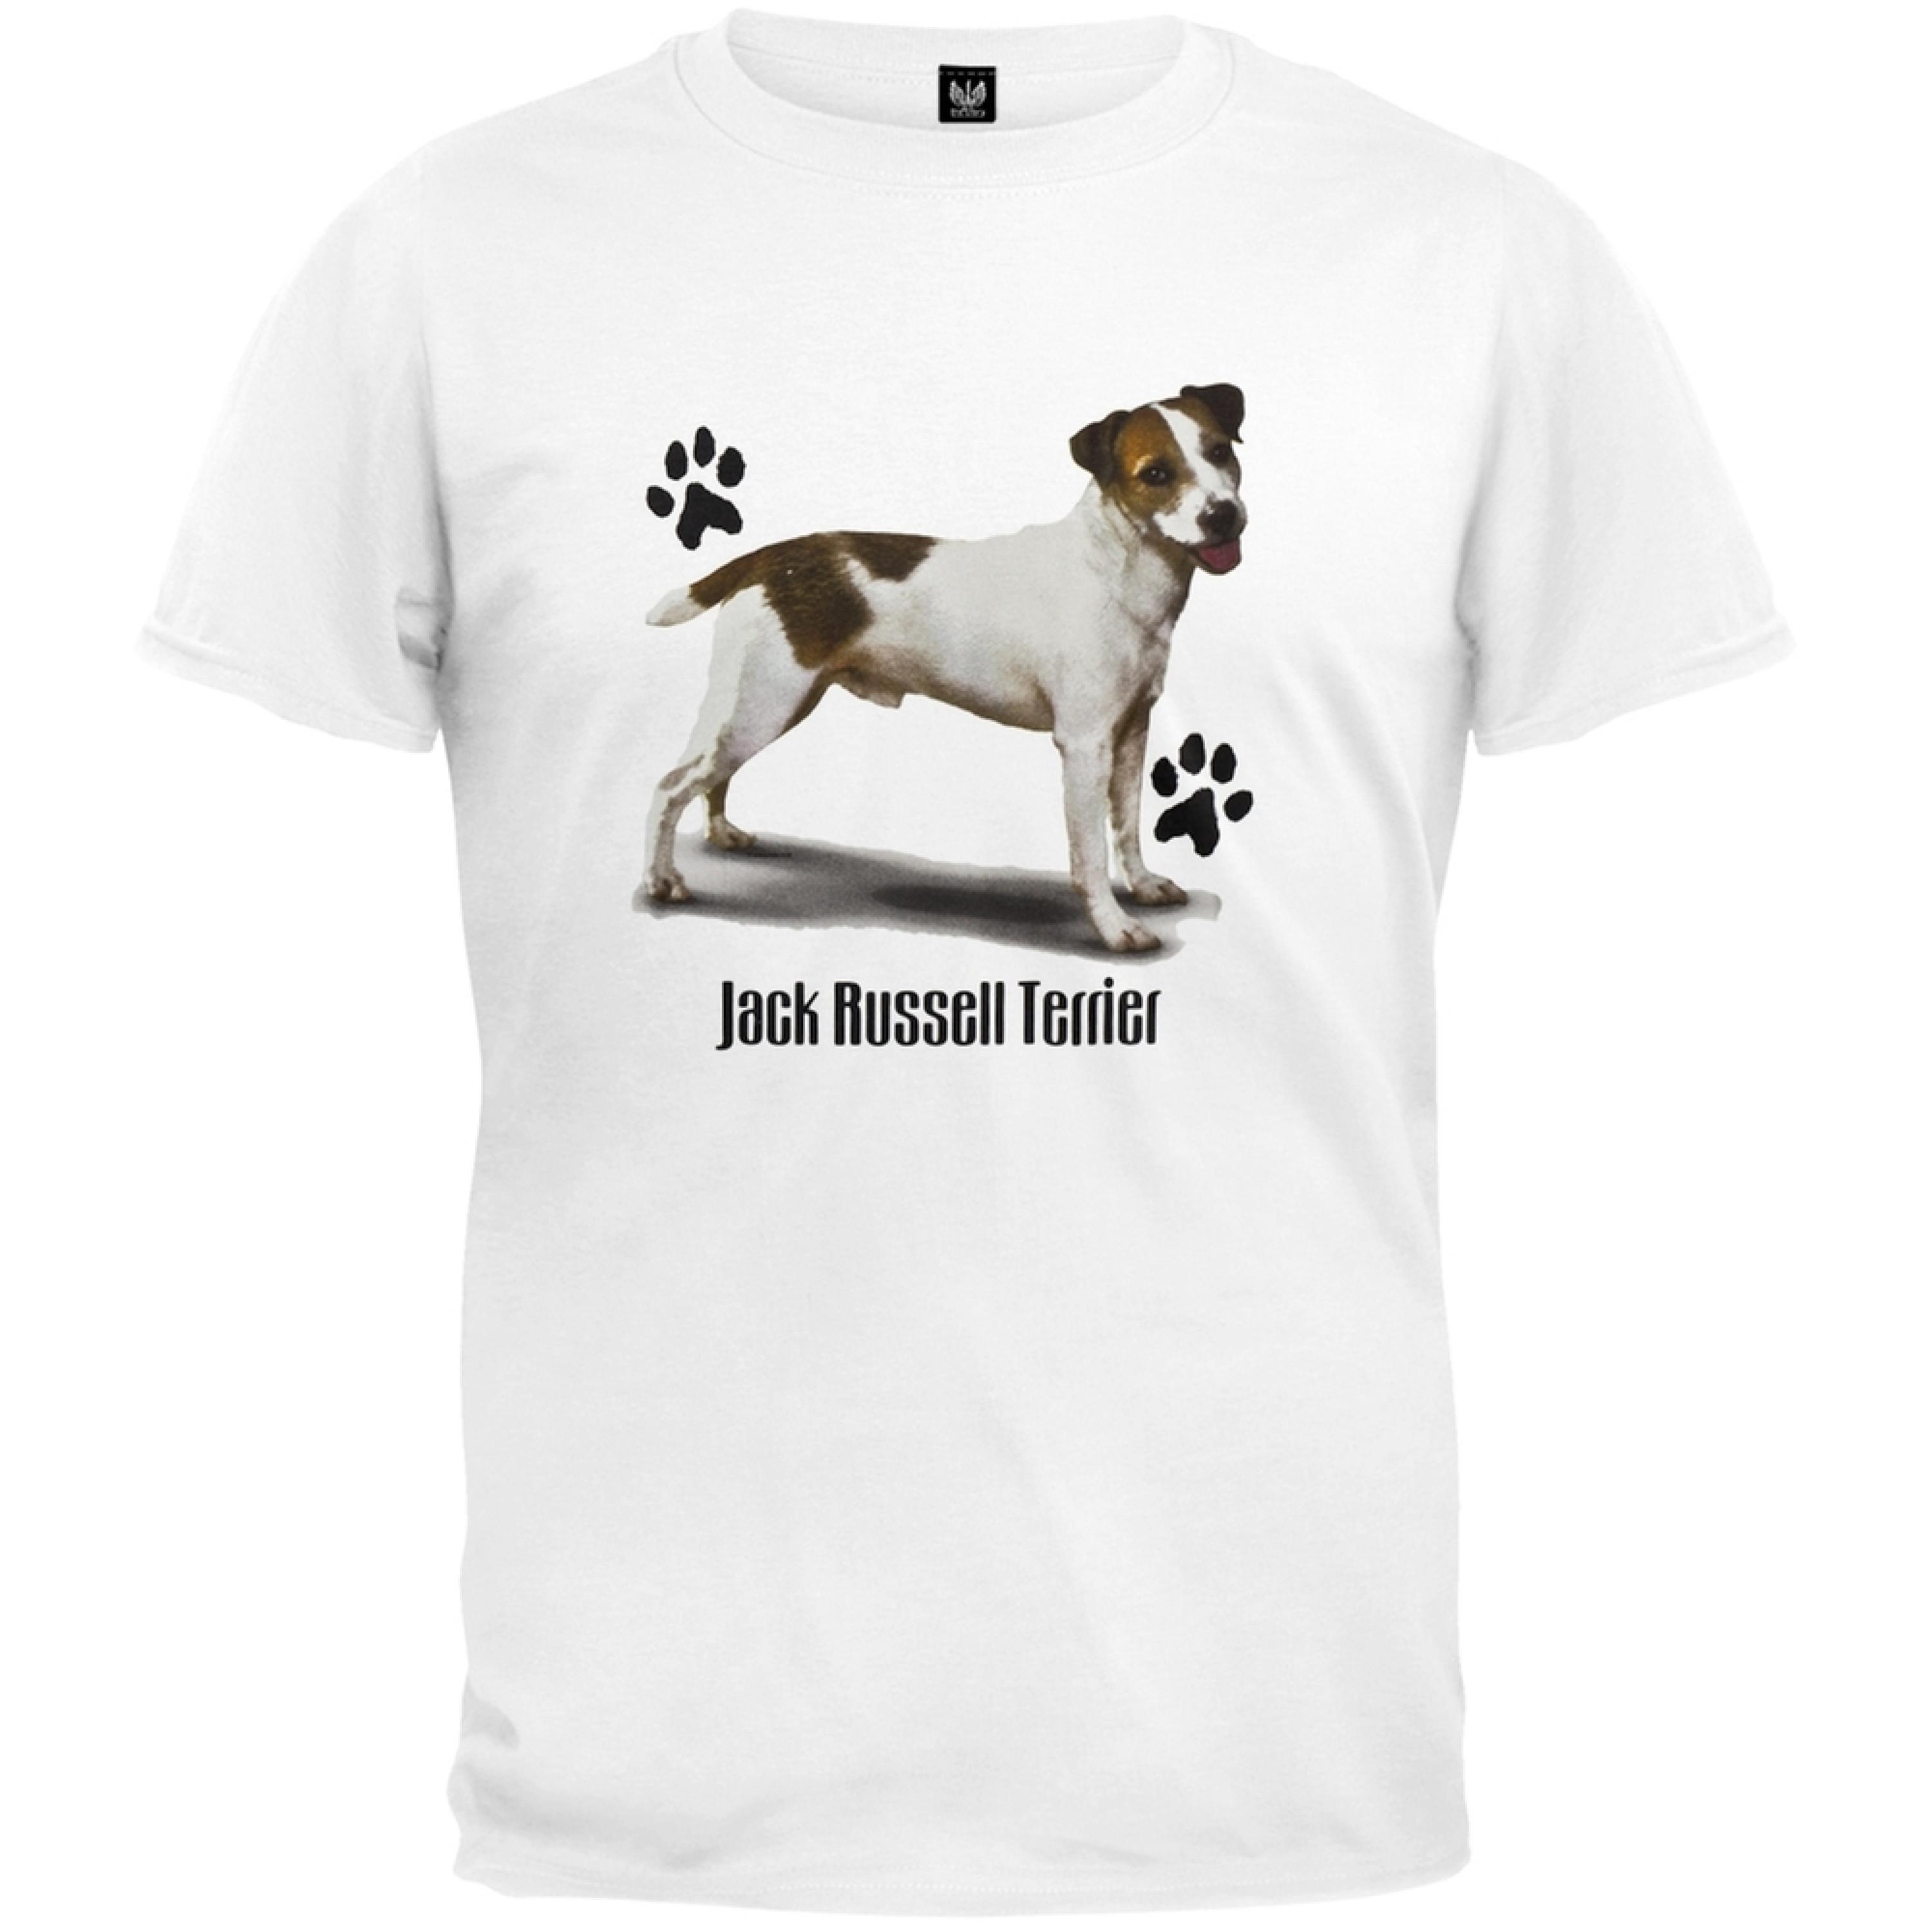 Jack Russell Terrier White T-Shirt - Small - Walmart.com